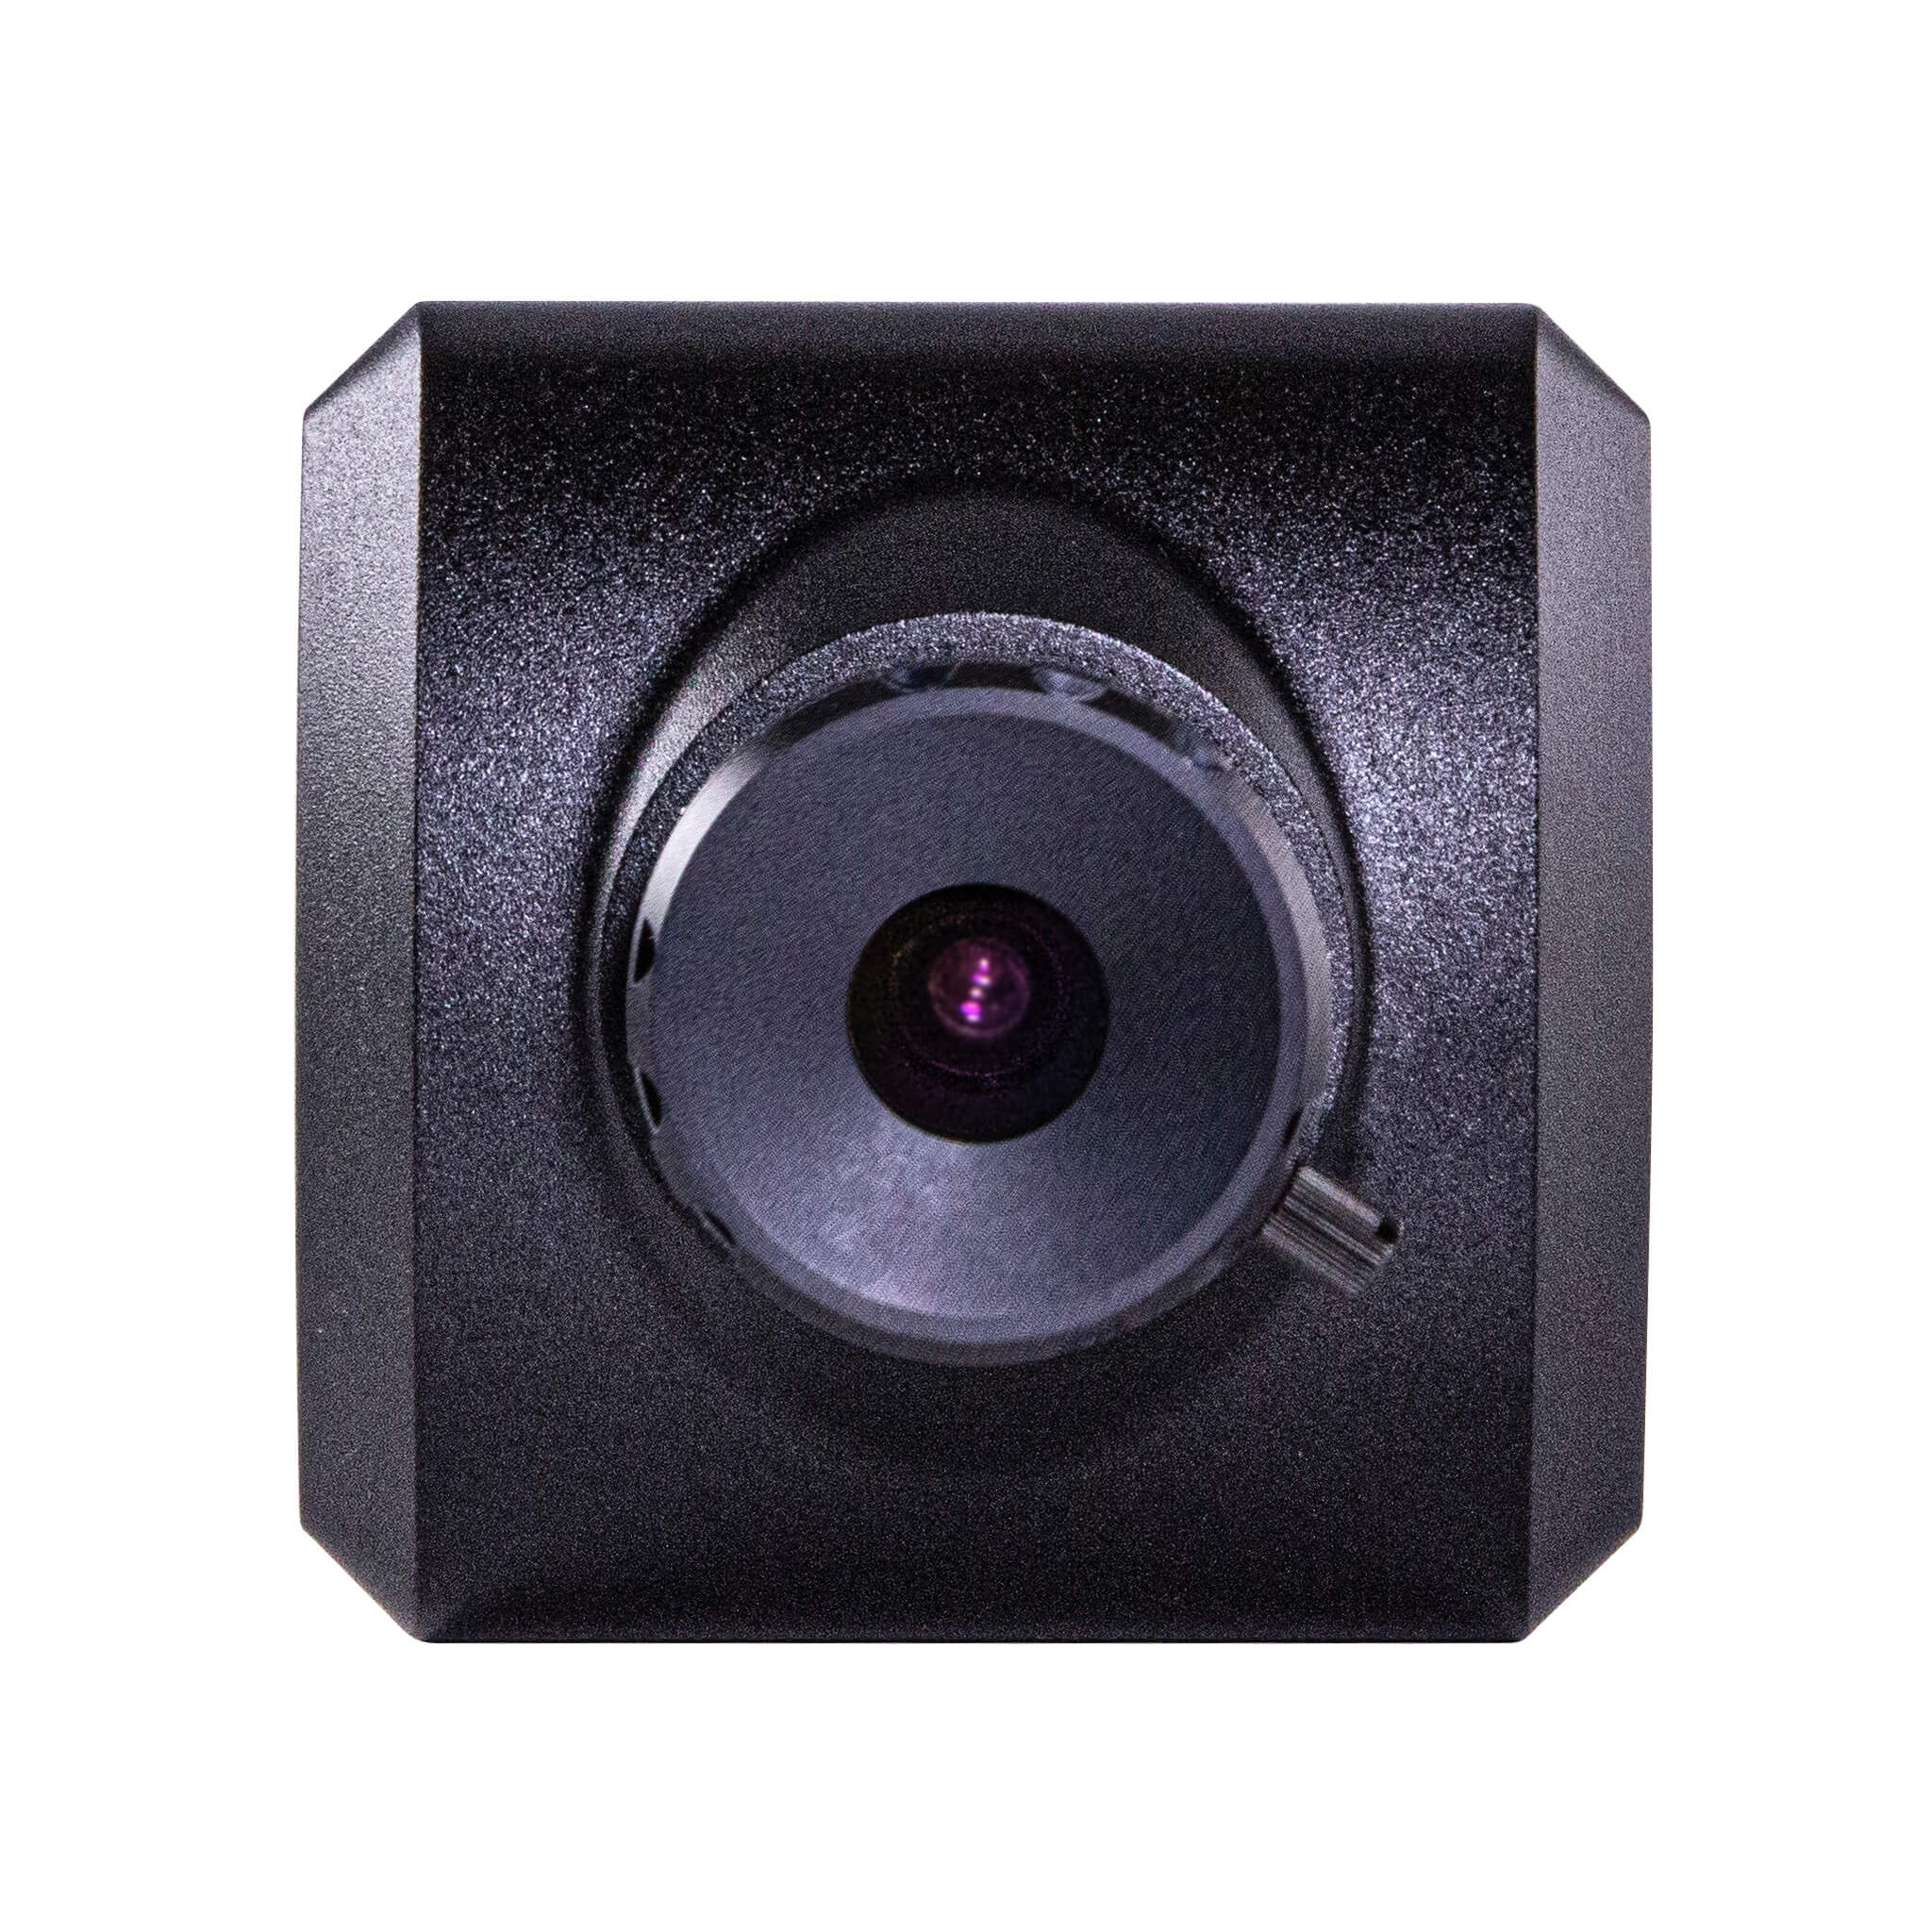 Marshall CV348 - Compact POV Camera 3G/HD-SDI, front